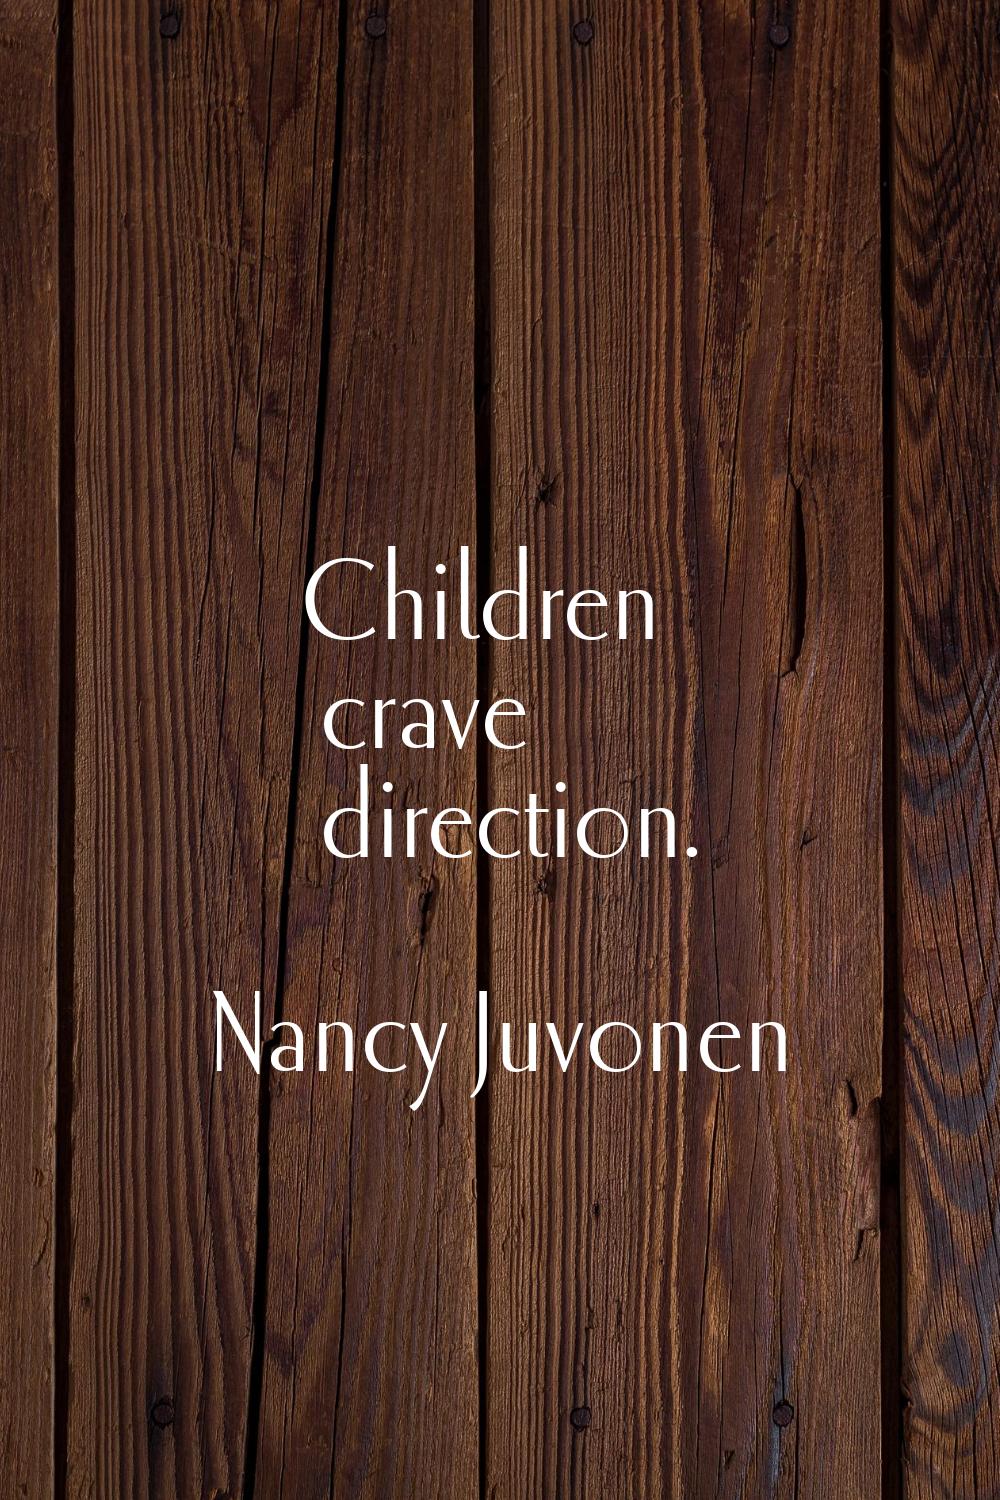 Children crave direction.